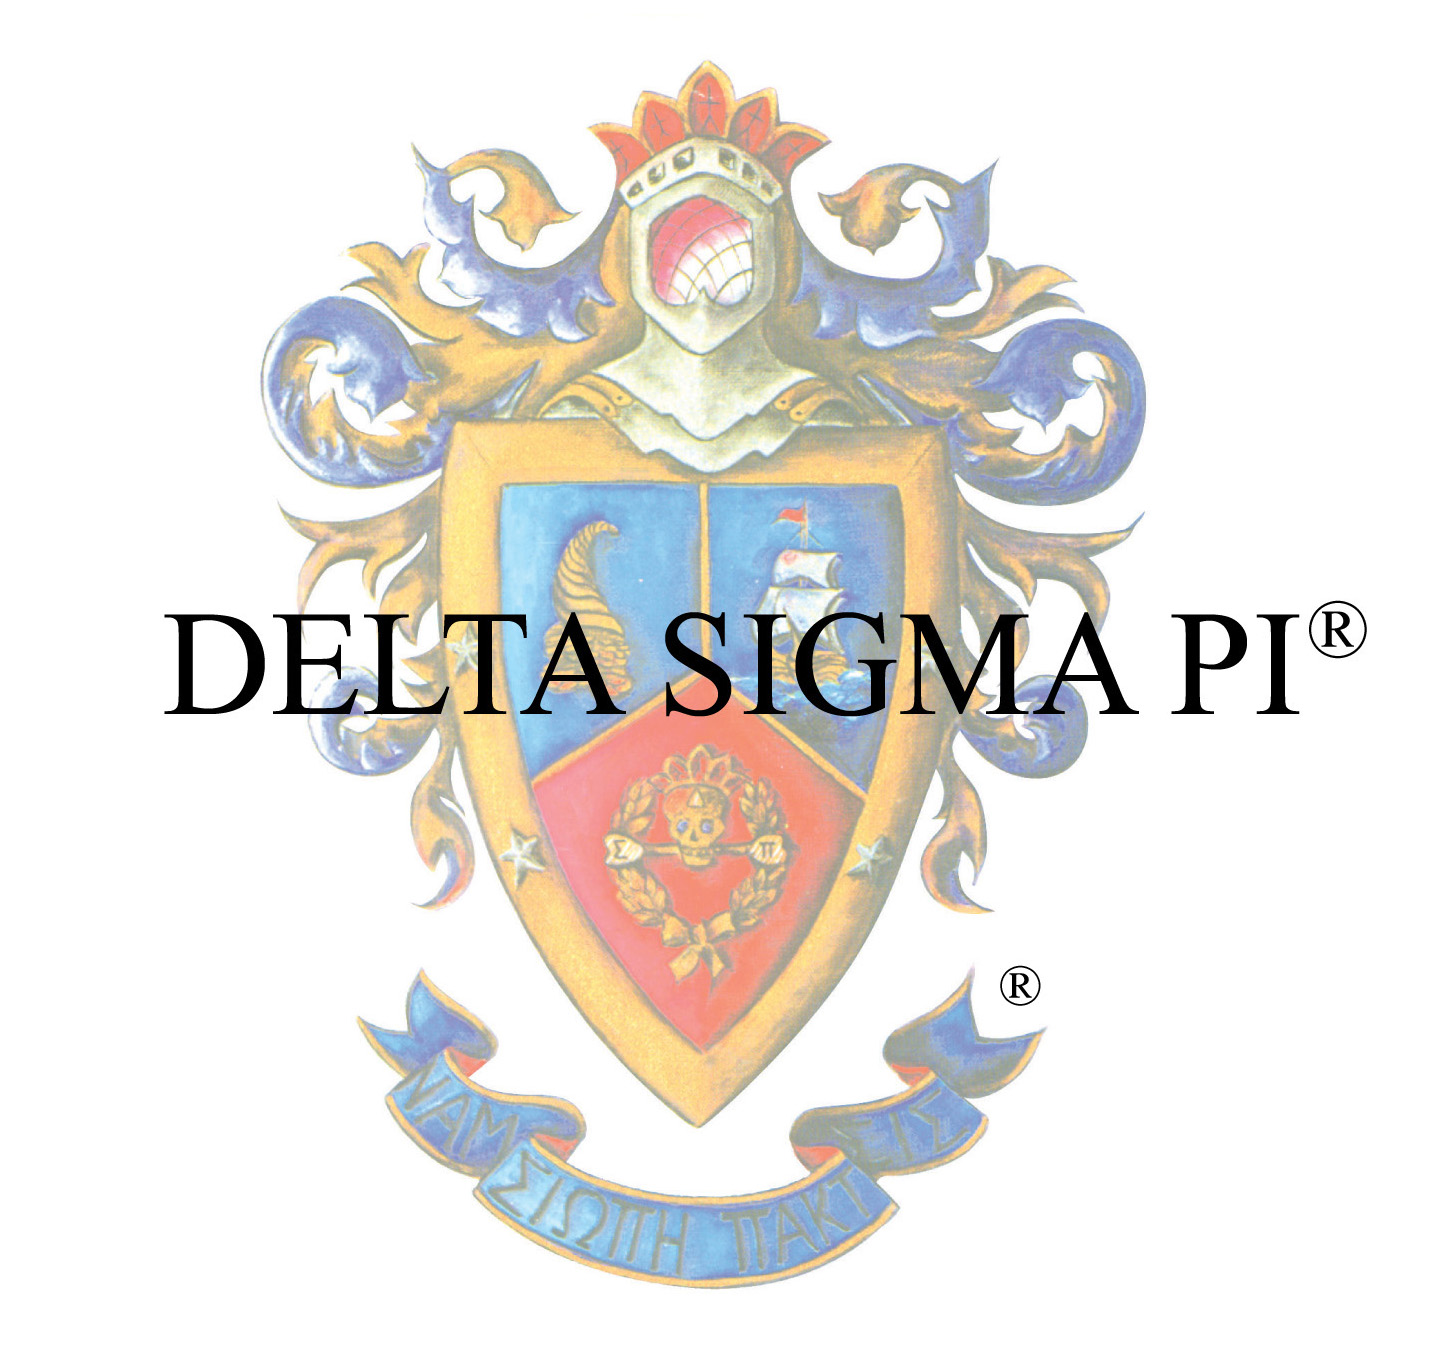 Alternate Delta Sigma Pi logo 2